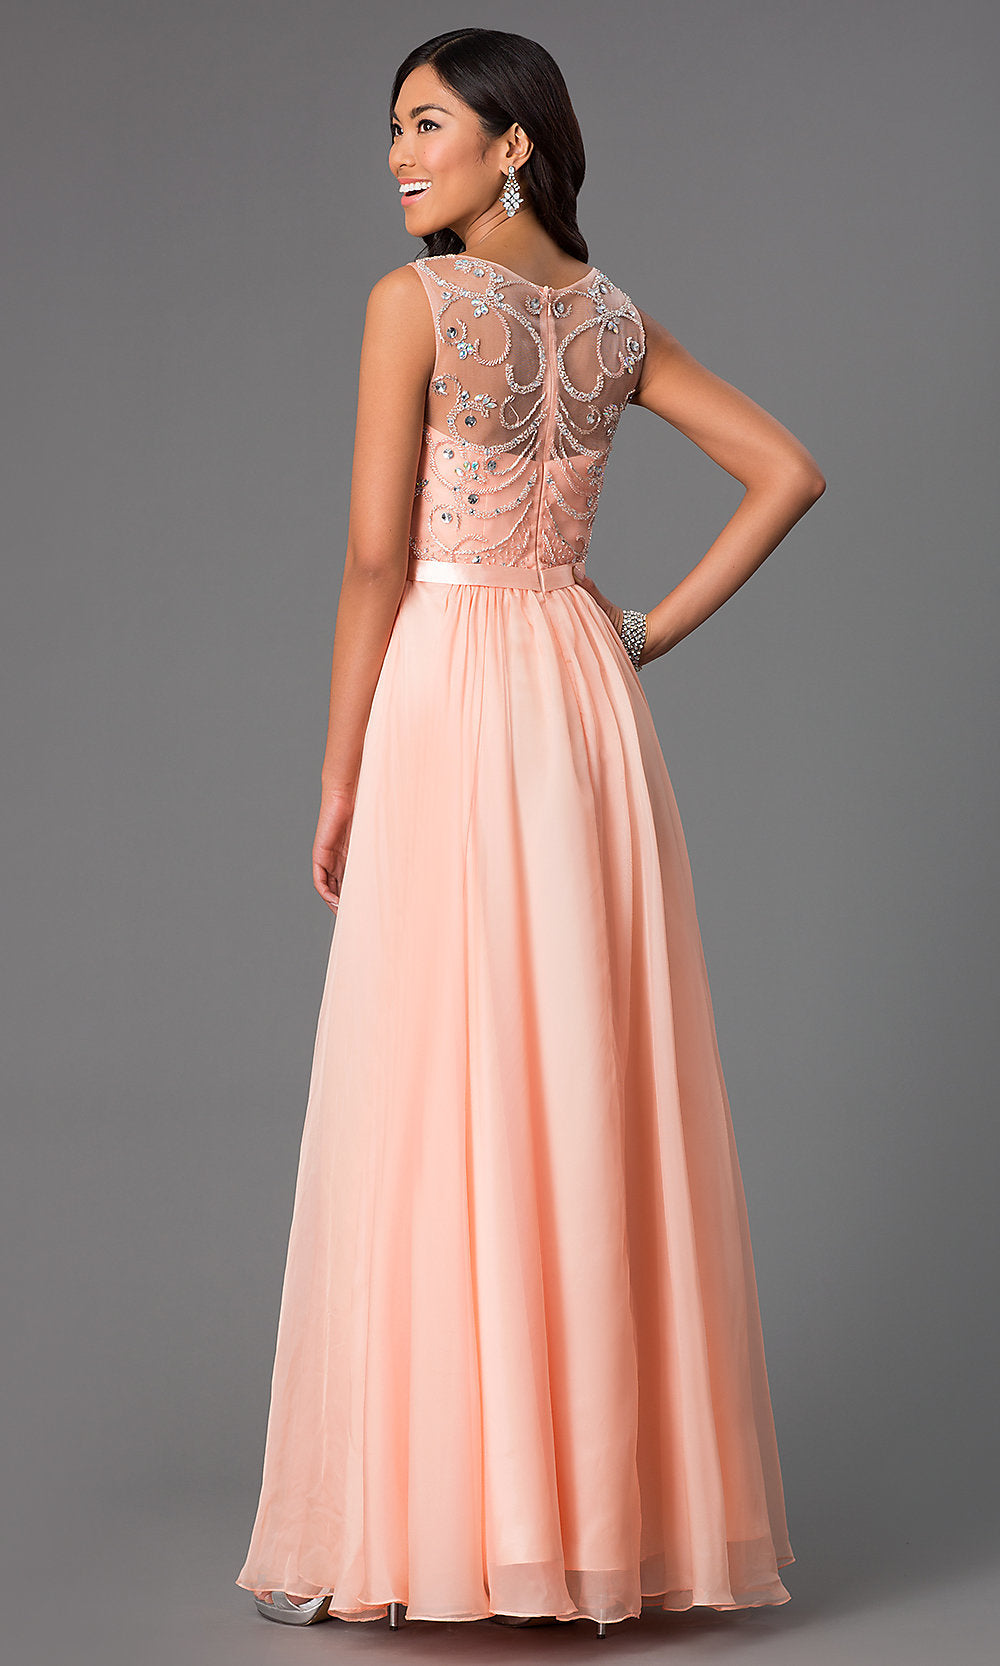 Long Sleeveless Prom Dress with Jewel Detailing